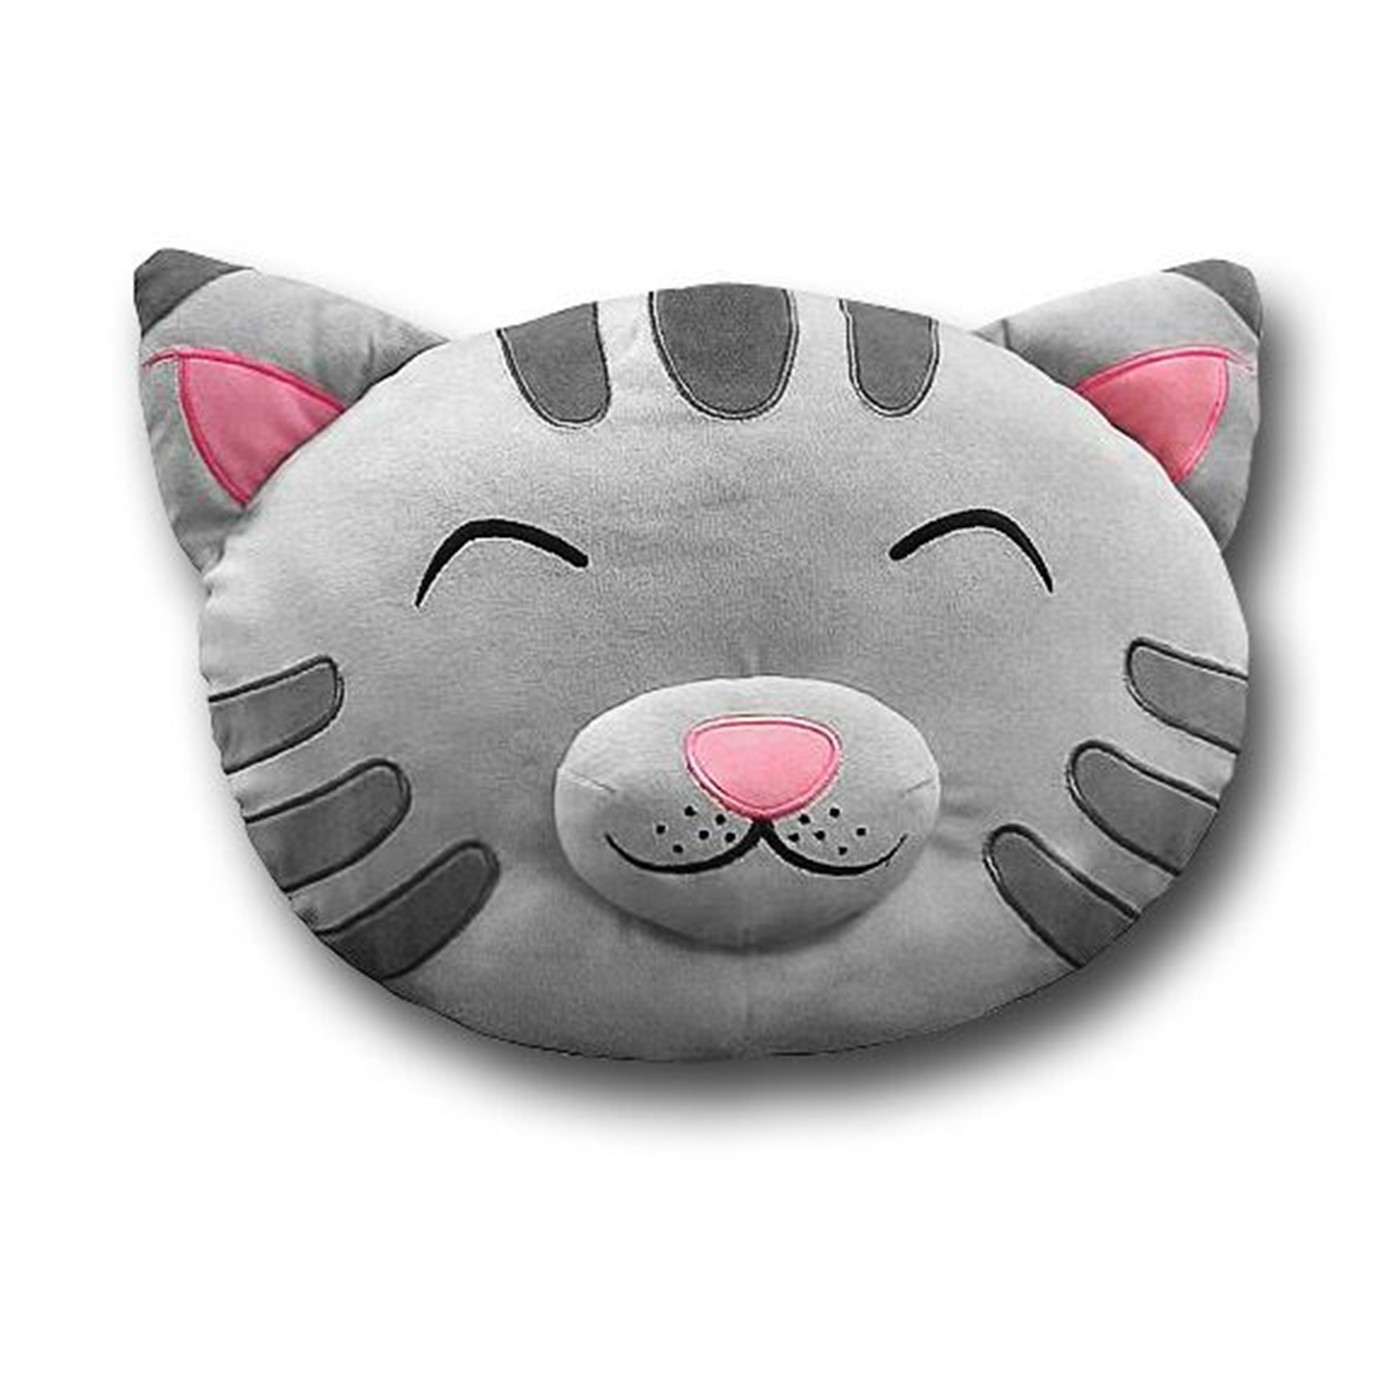 Big Bang Theory Soft Kitty Cuddly Face Plush Pillow